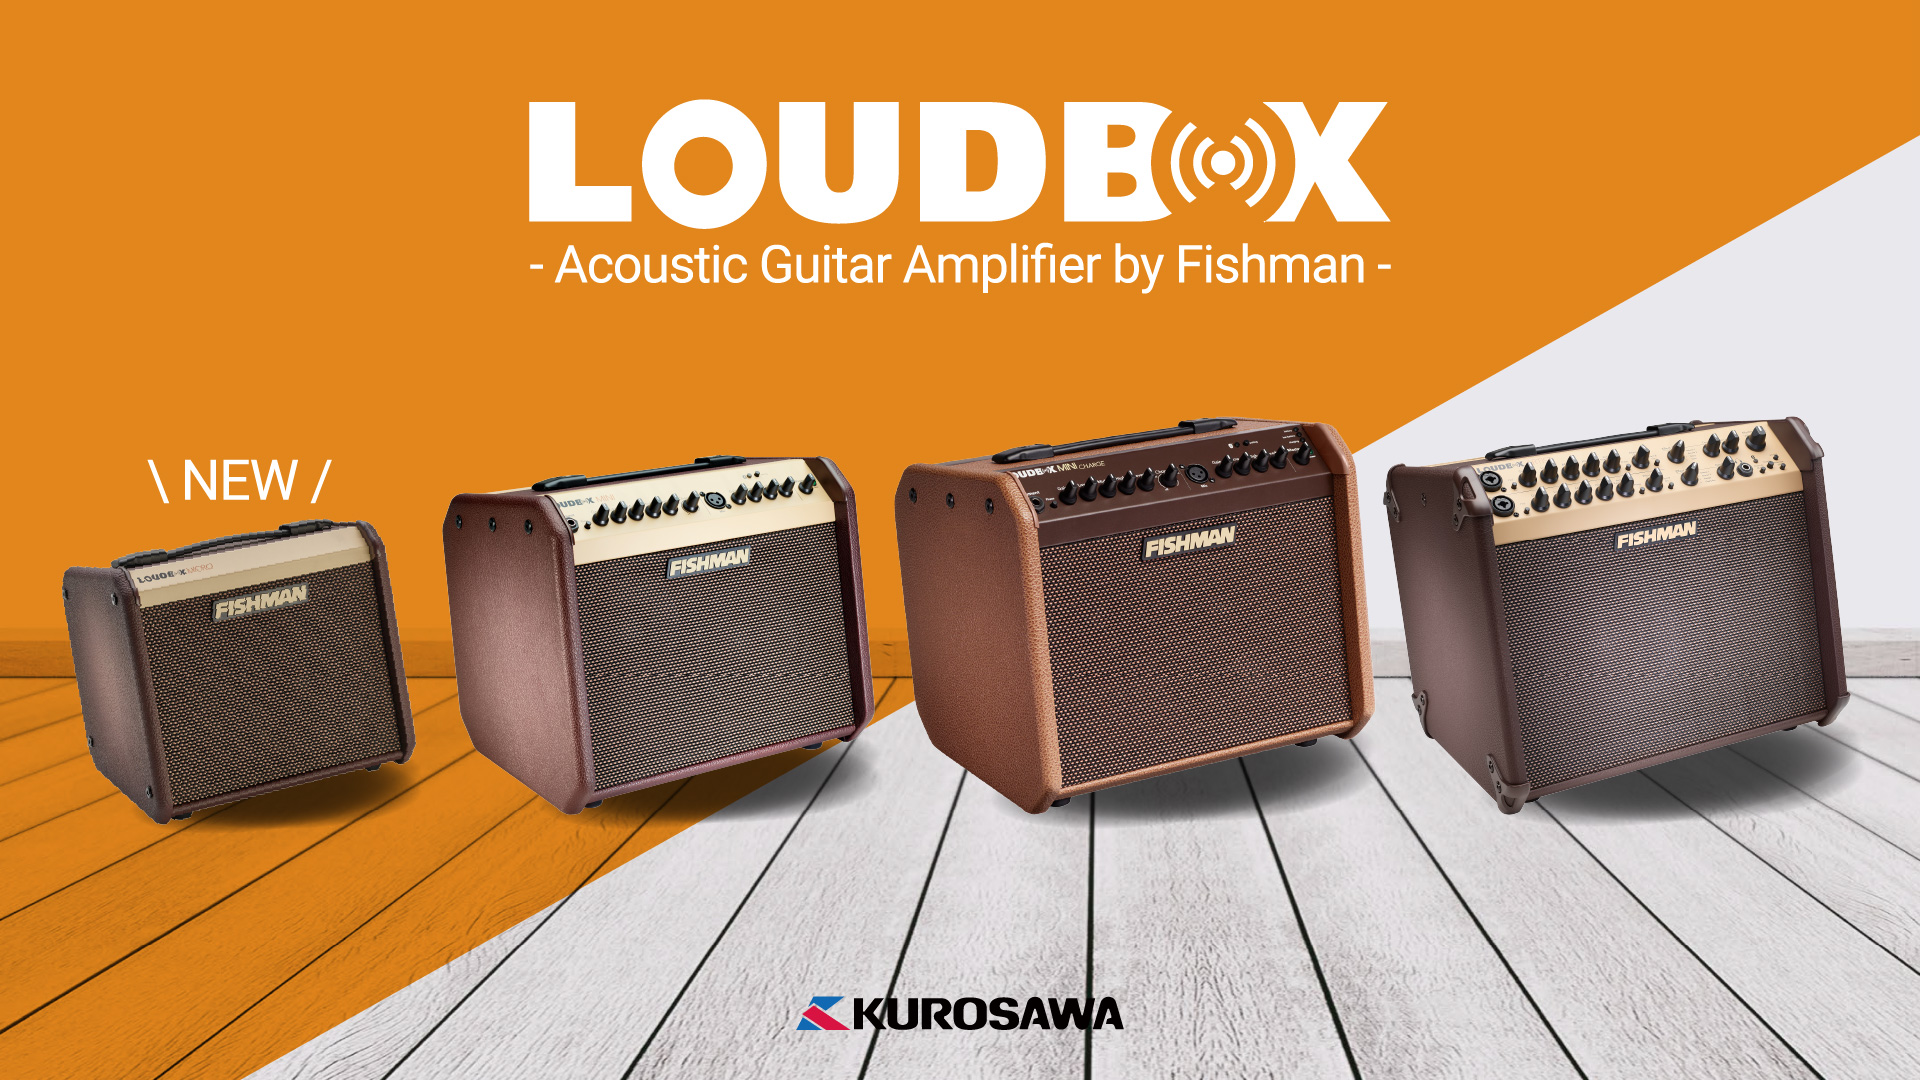 LOUDBOX - Acoustic Guitar Amplifier by Fishman -